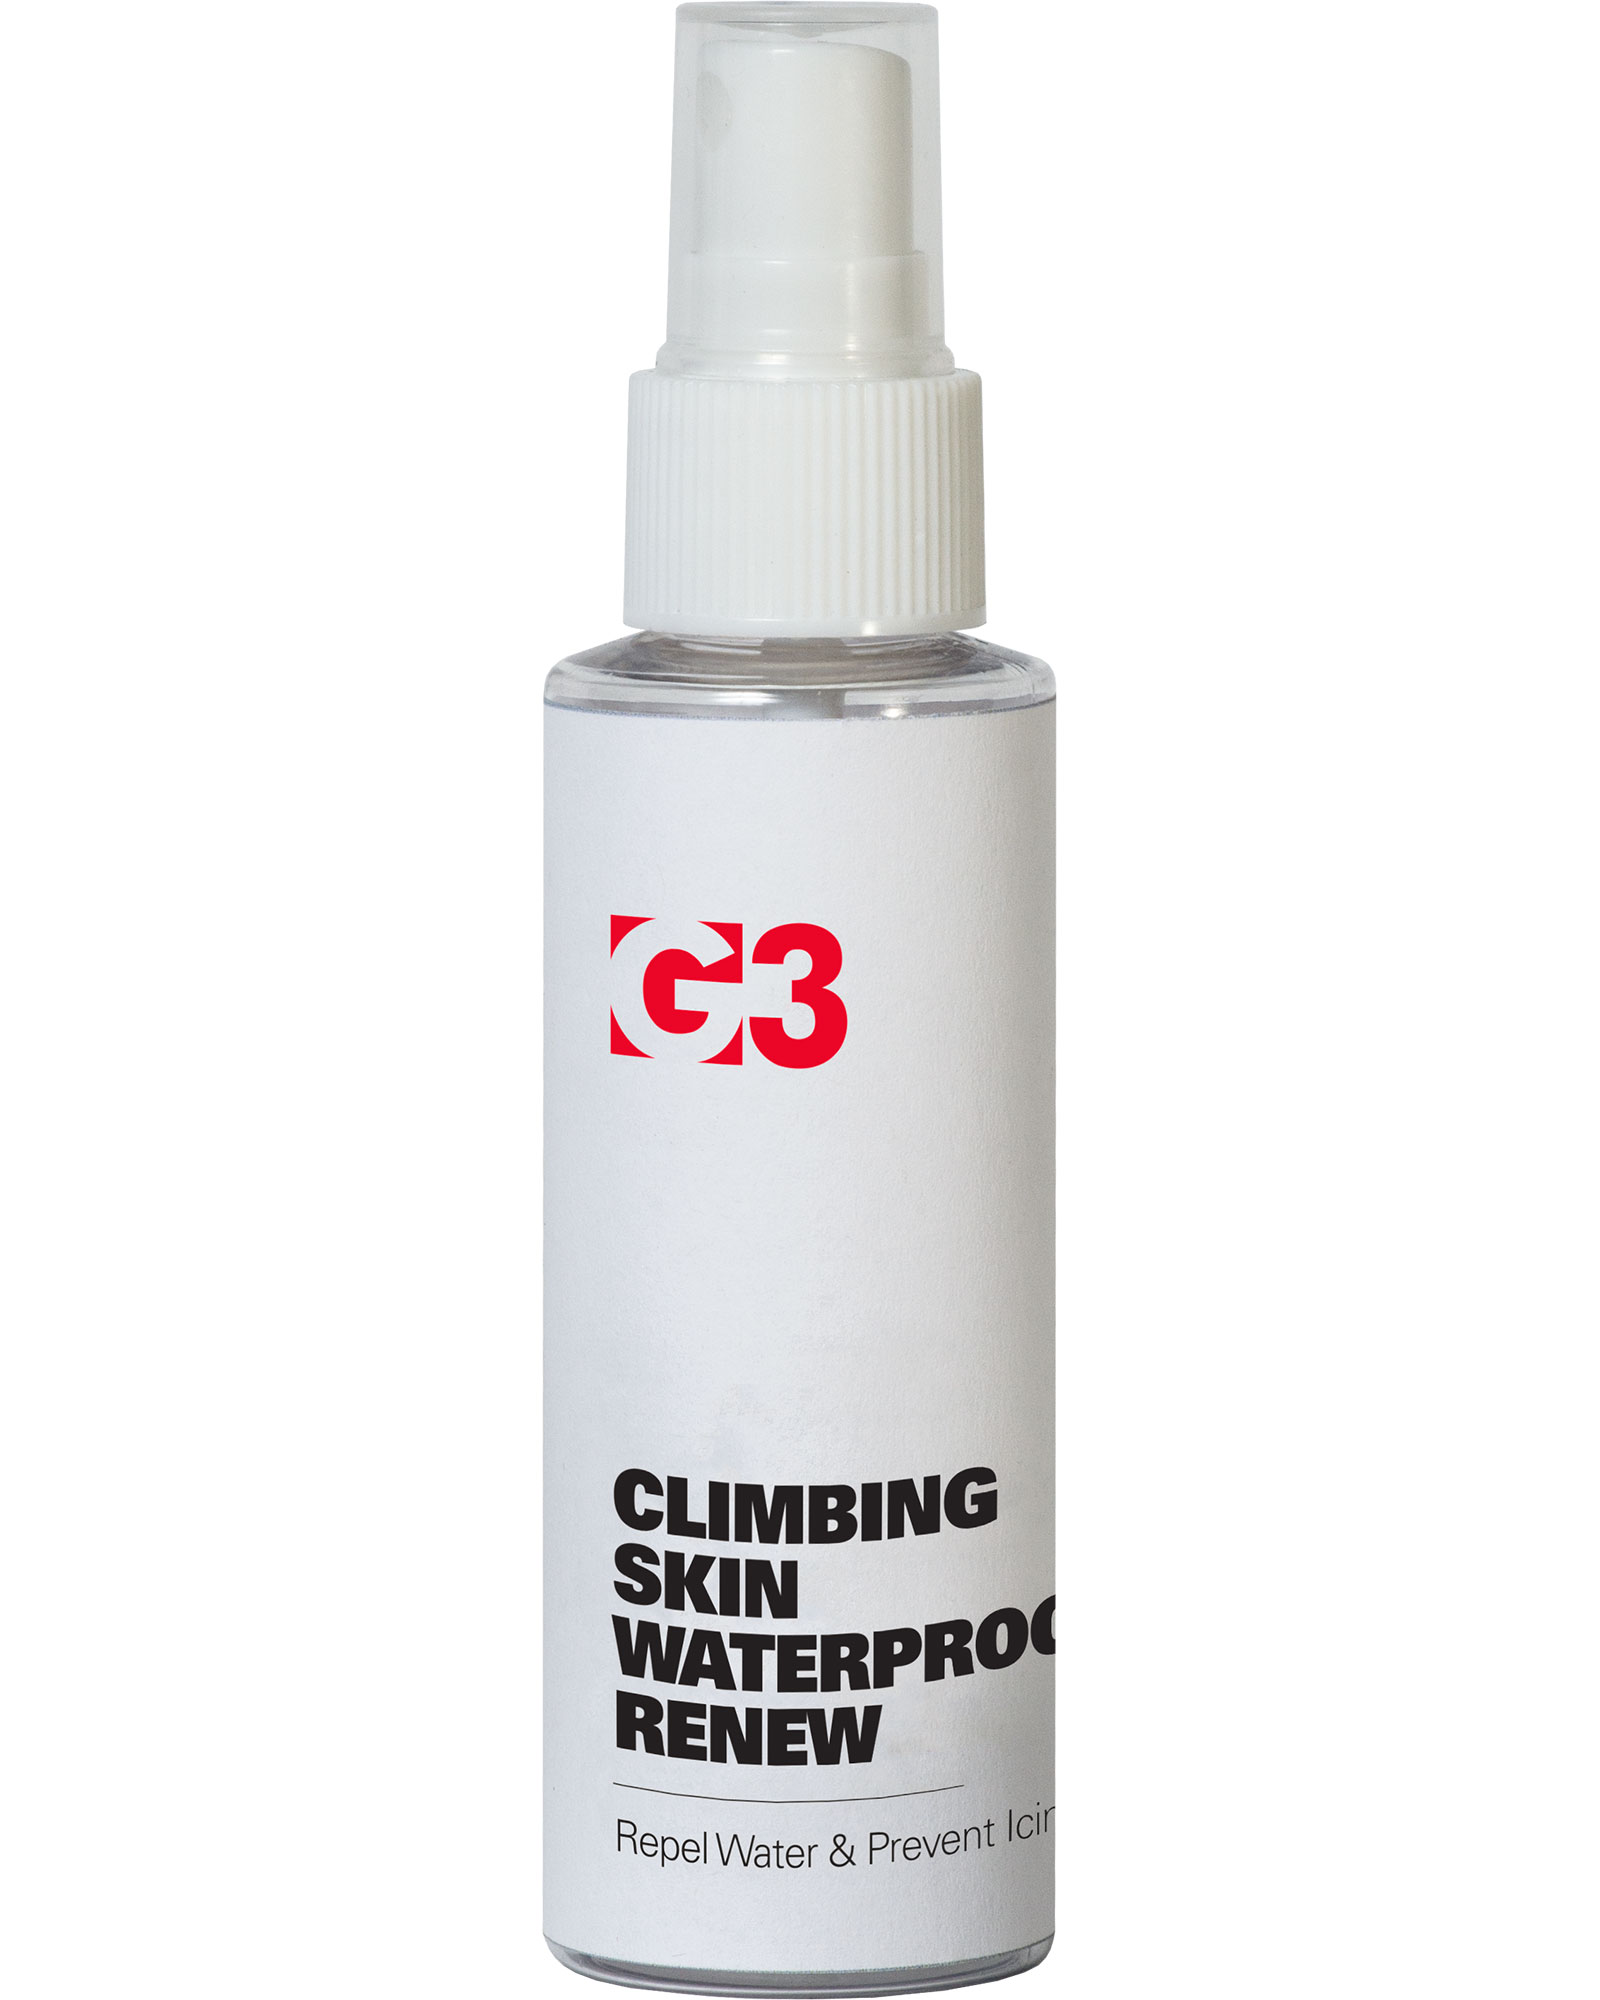 G3 Waterproof Renew 0